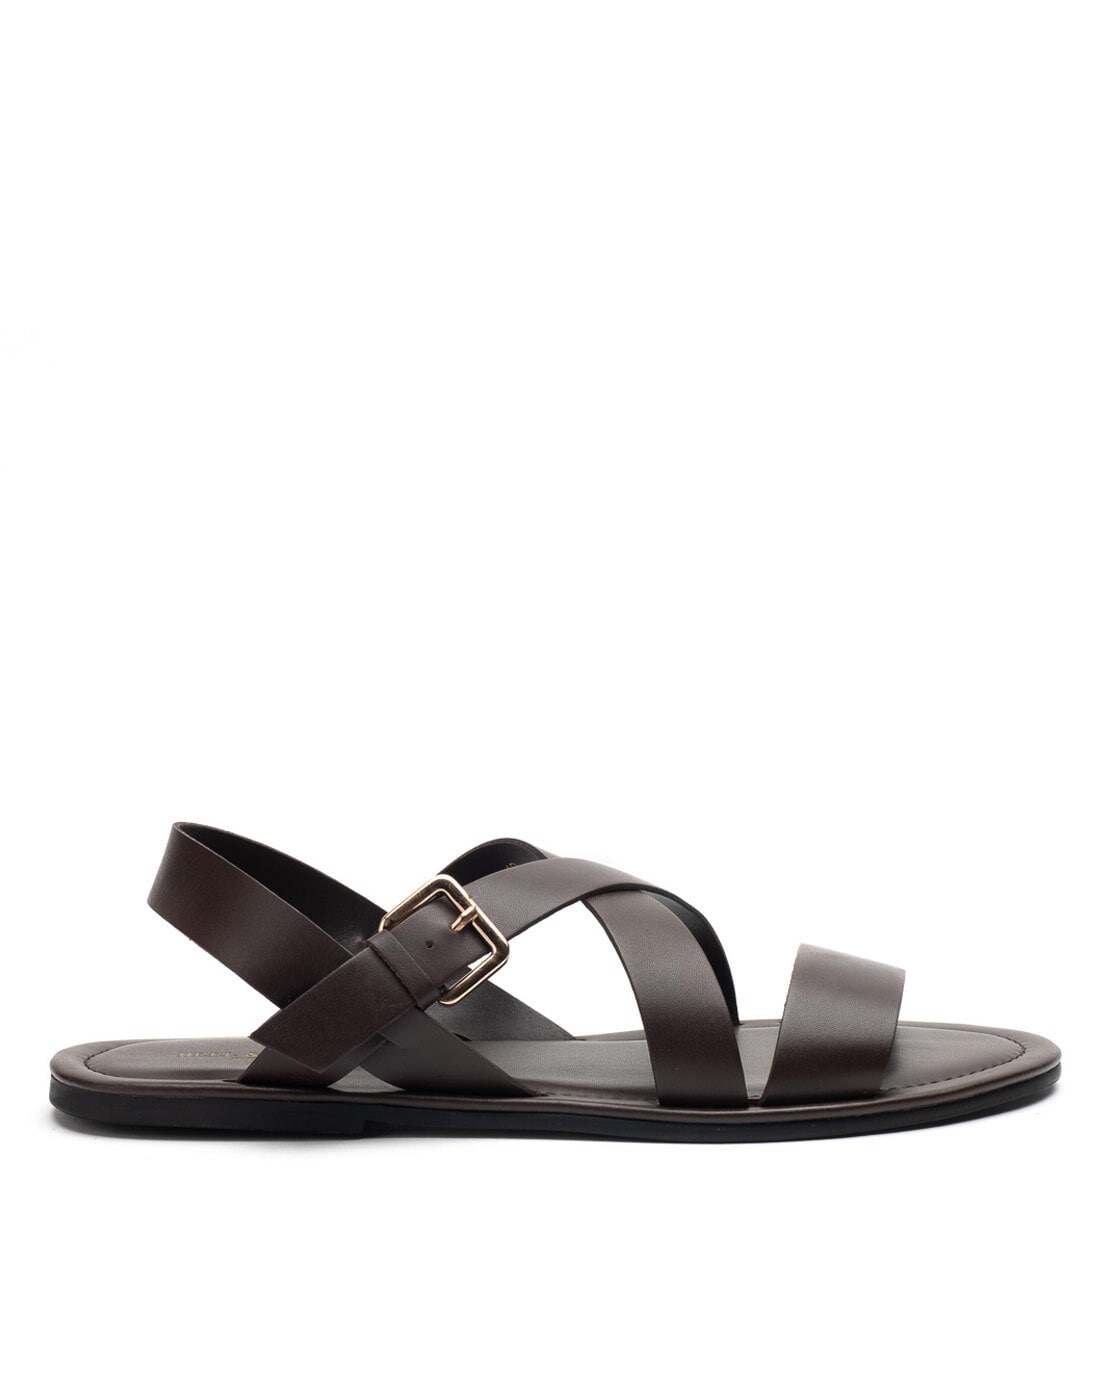 Buy Black Sandals for Men by ID Online | Ajio.com-sgquangbinhtourist.com.vn